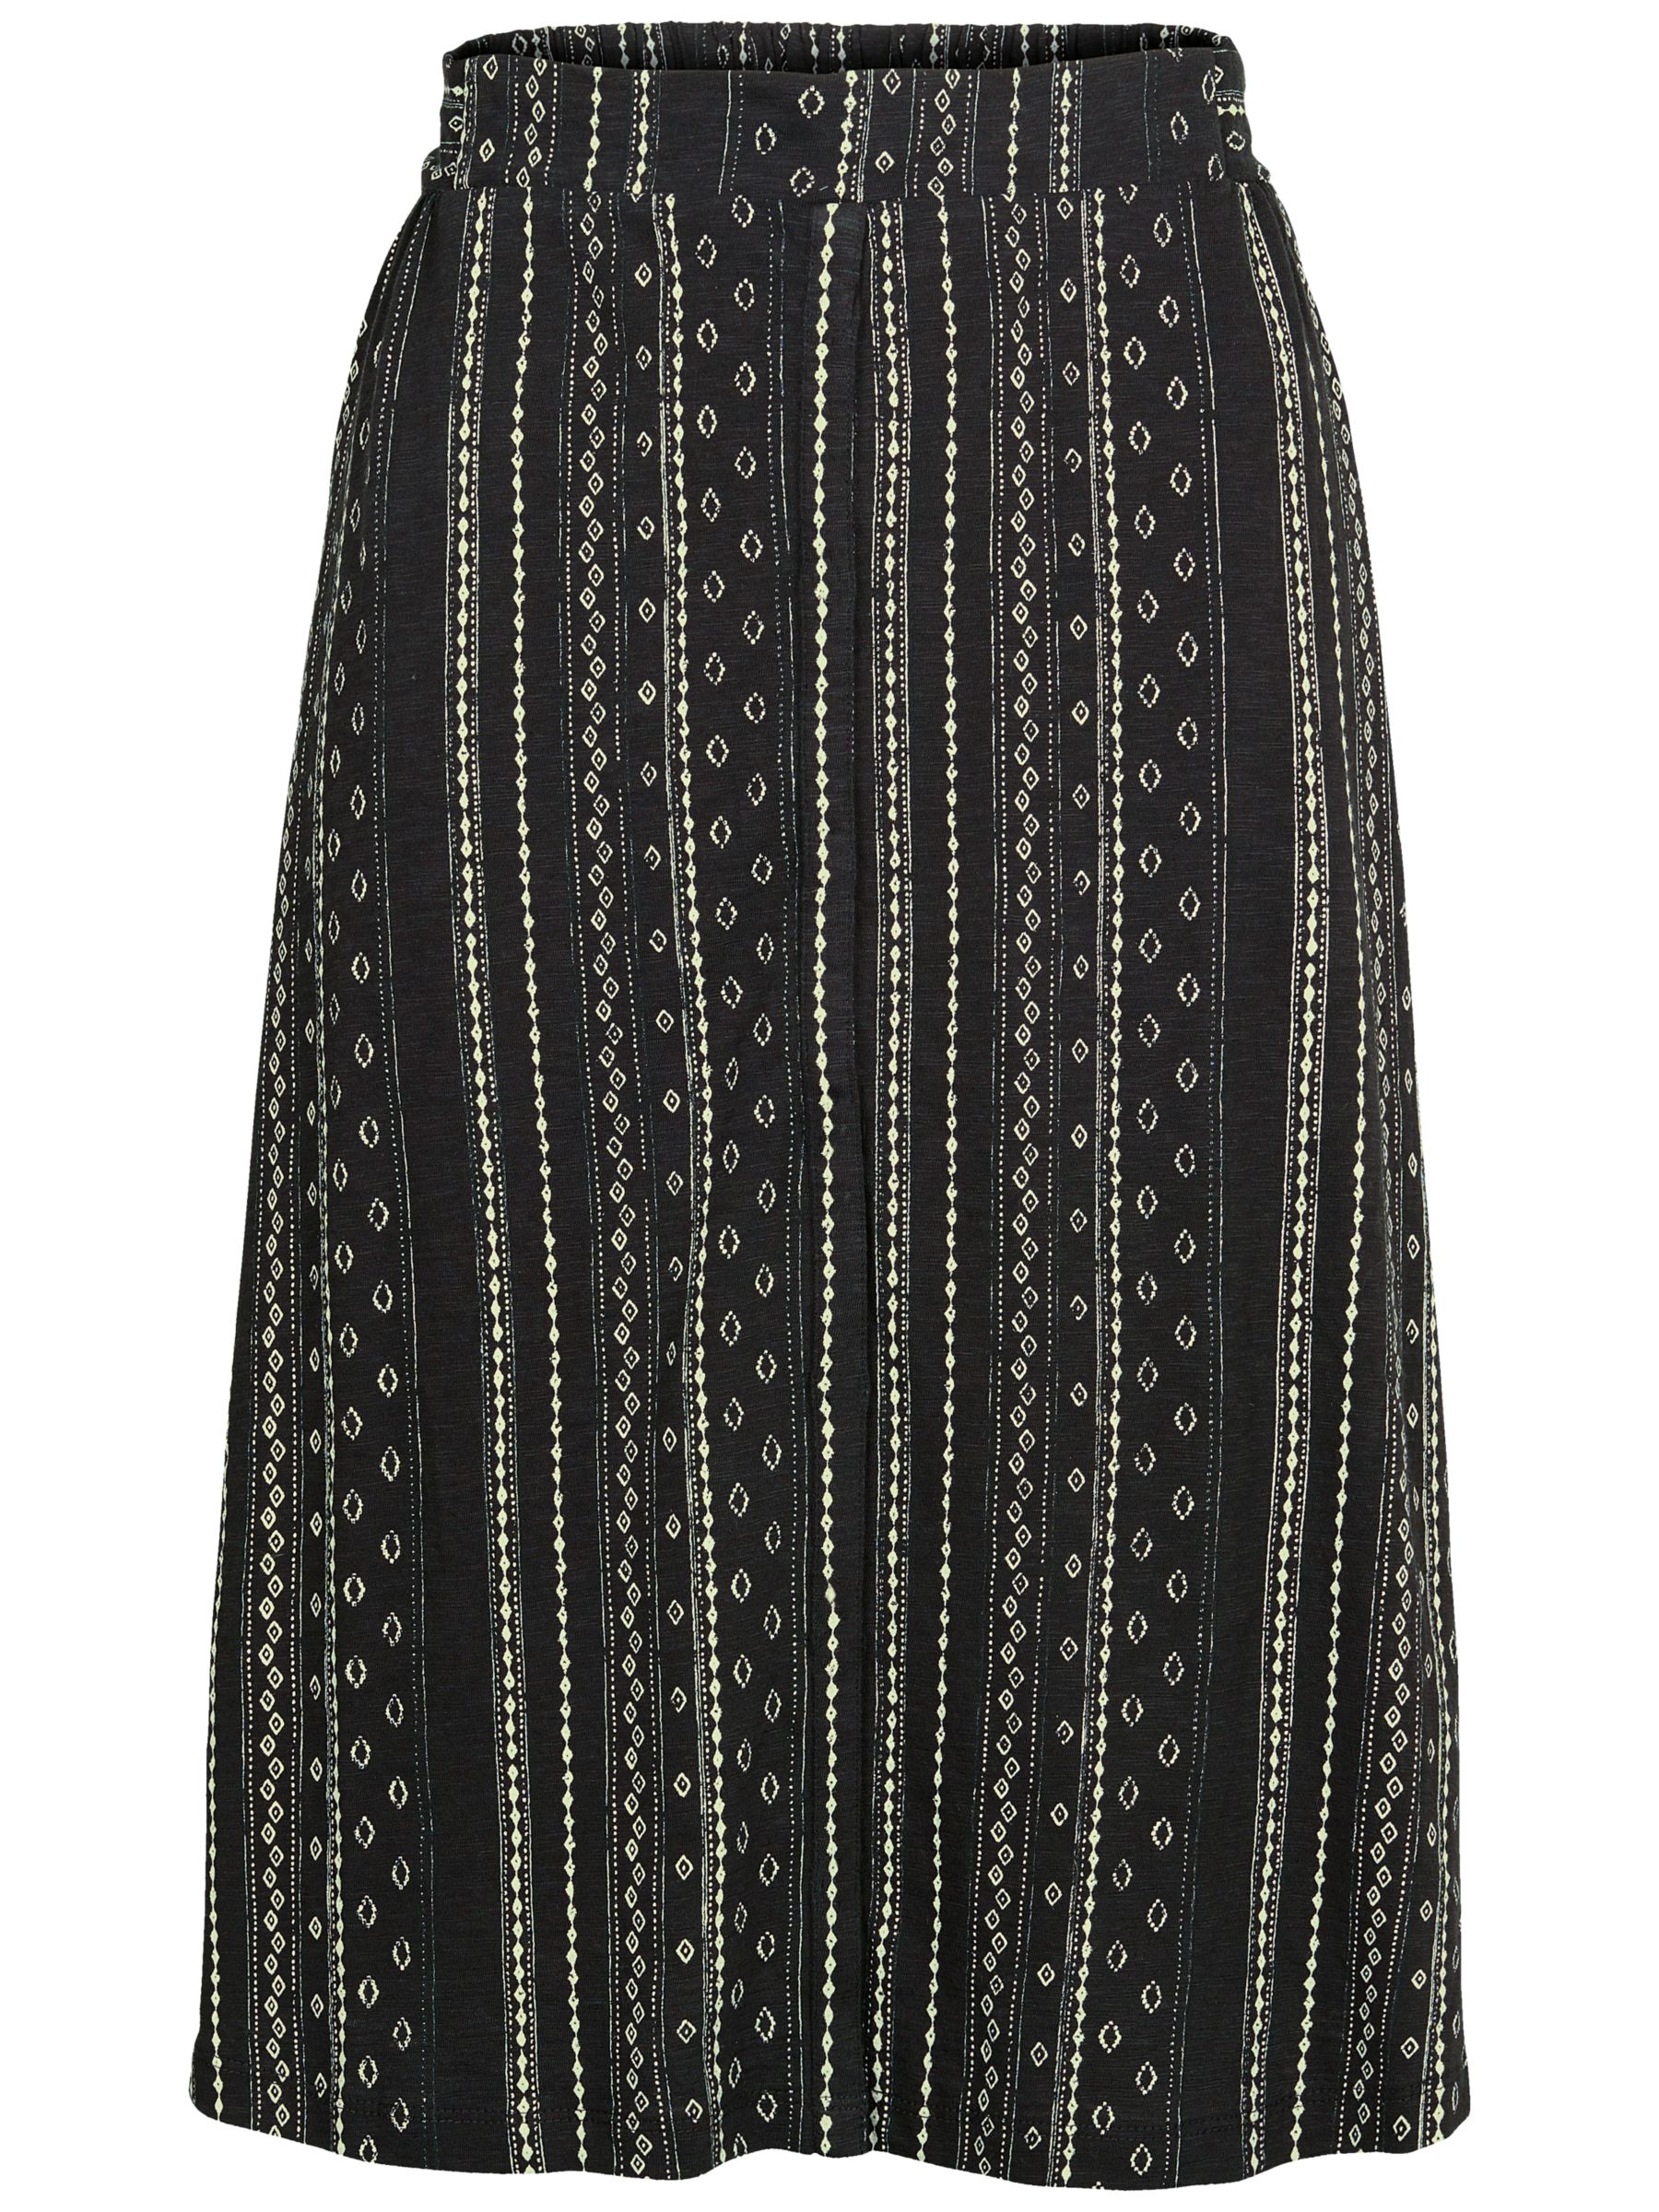 Fat Face Mina Sketch Stripe Skirt, Phantom at John Lewis & Partners